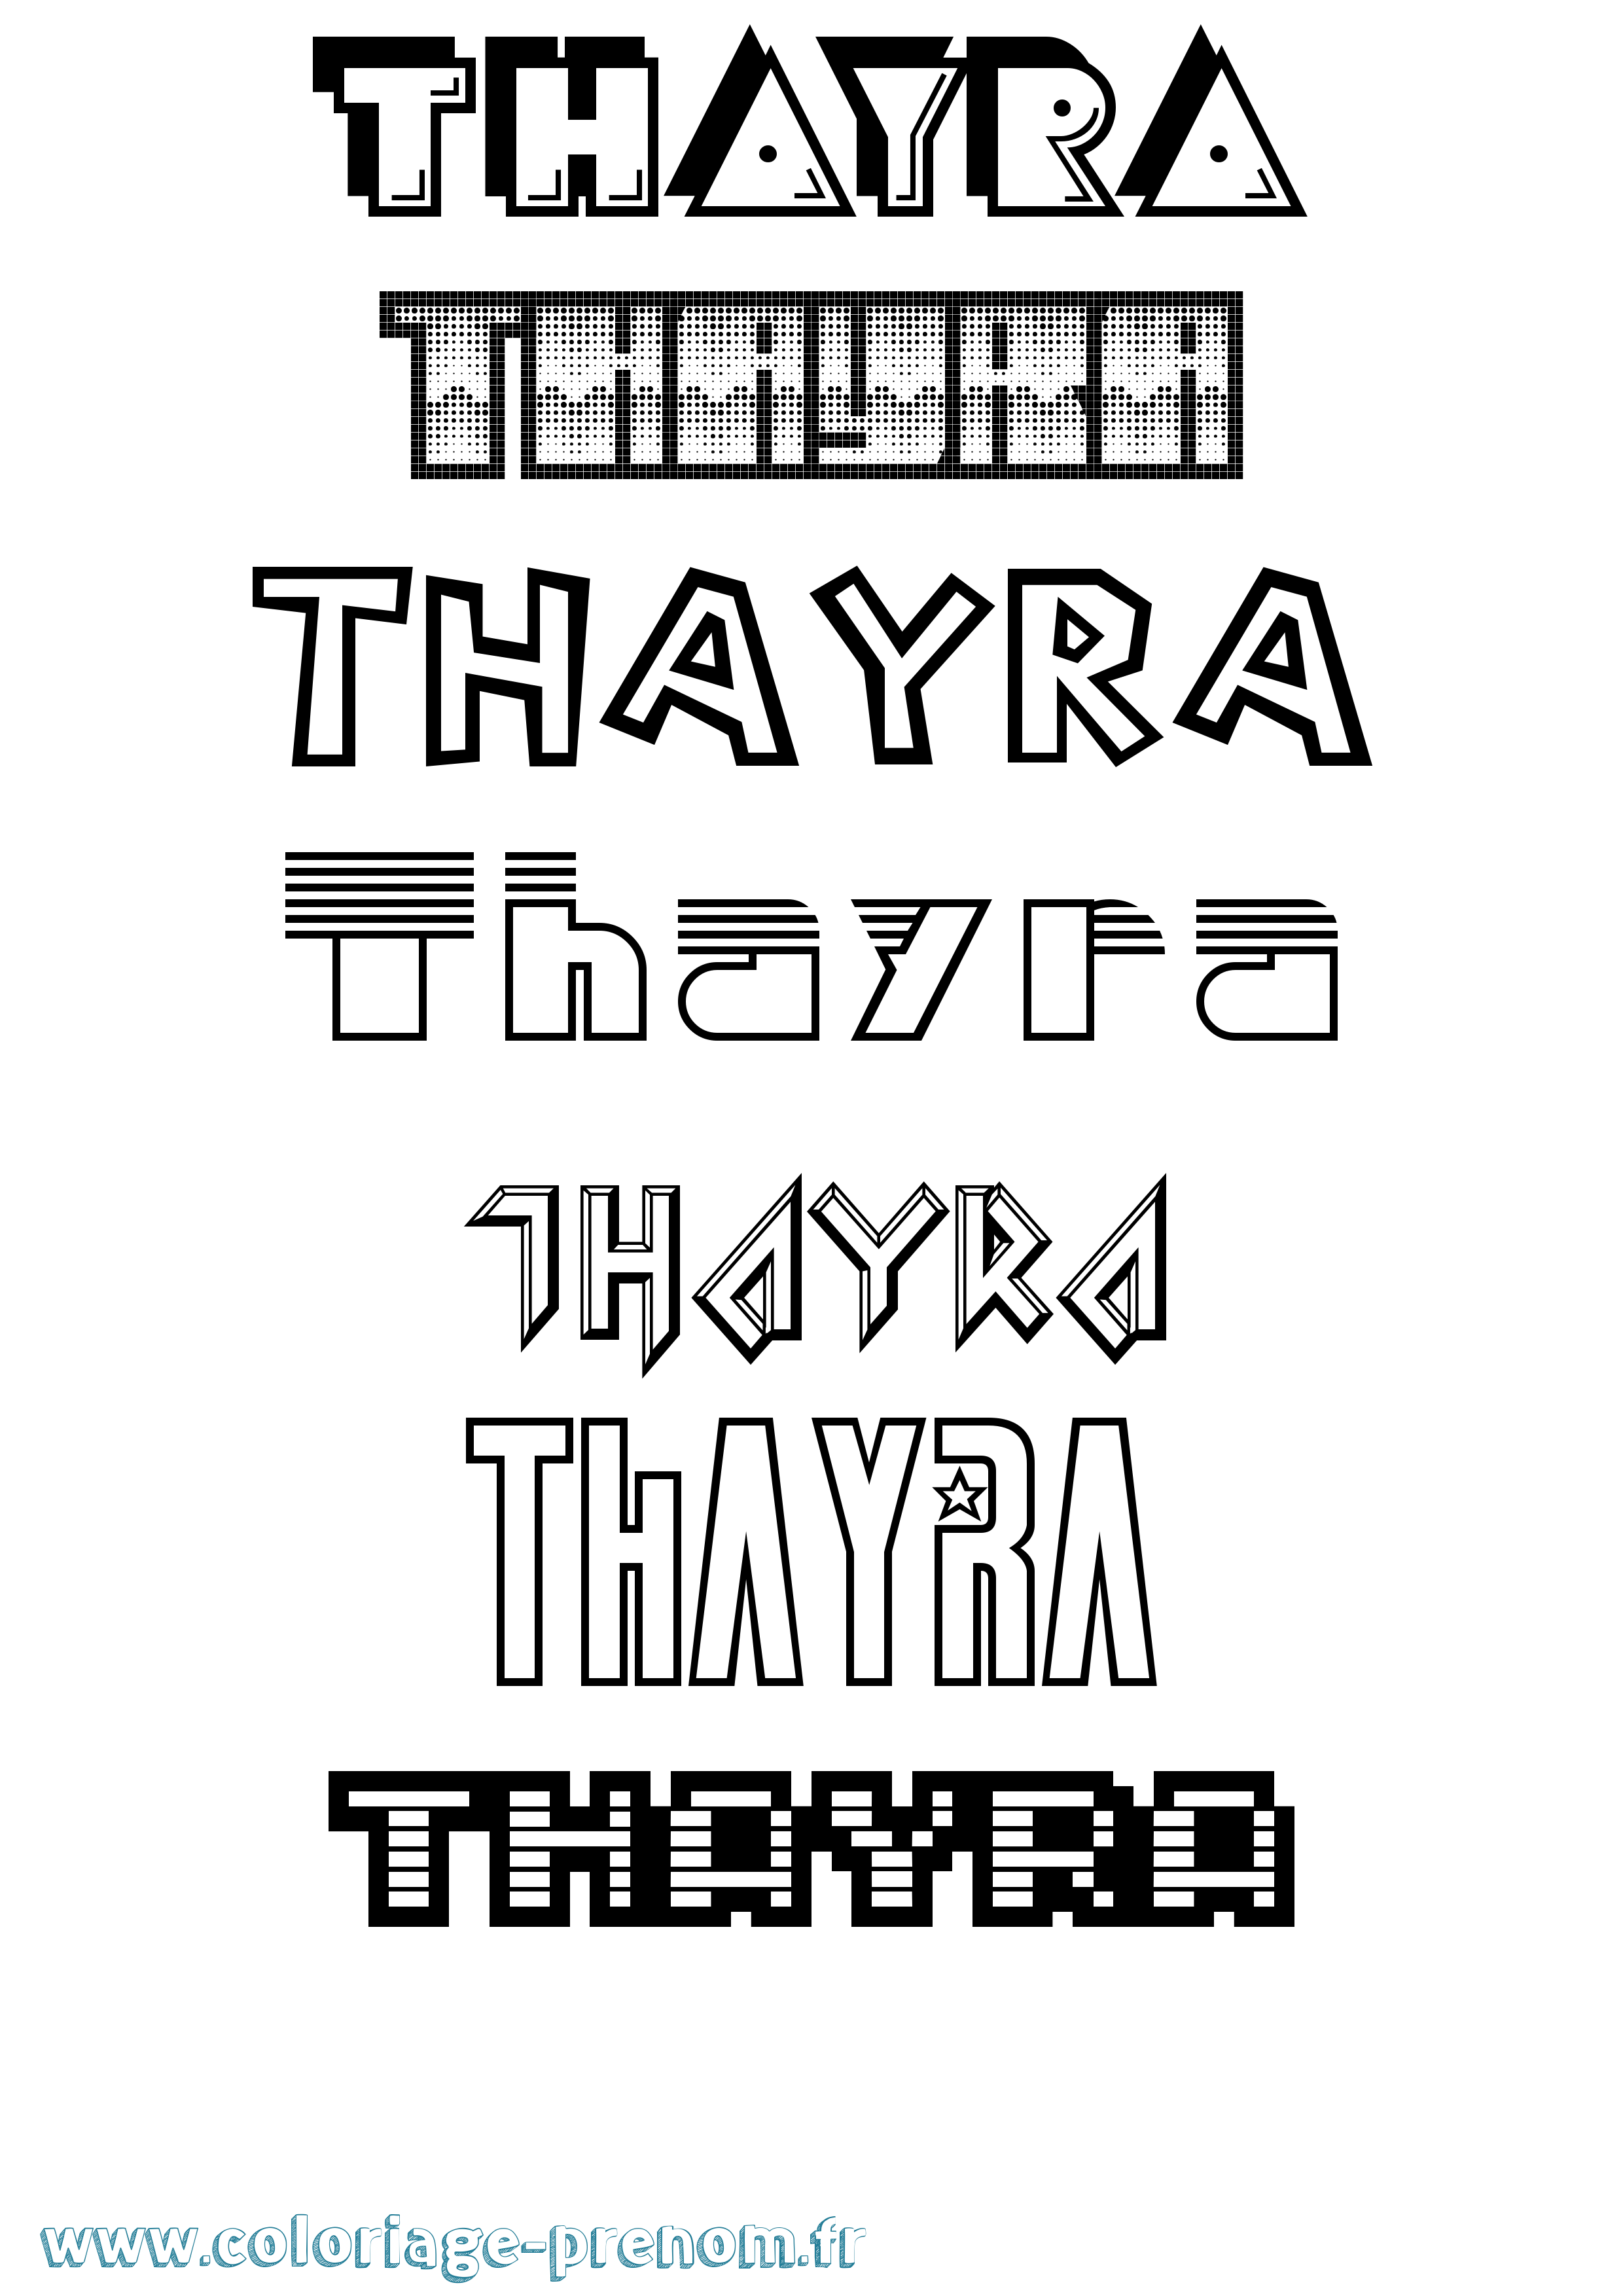 Coloriage prénom Thayra Jeux Vidéos